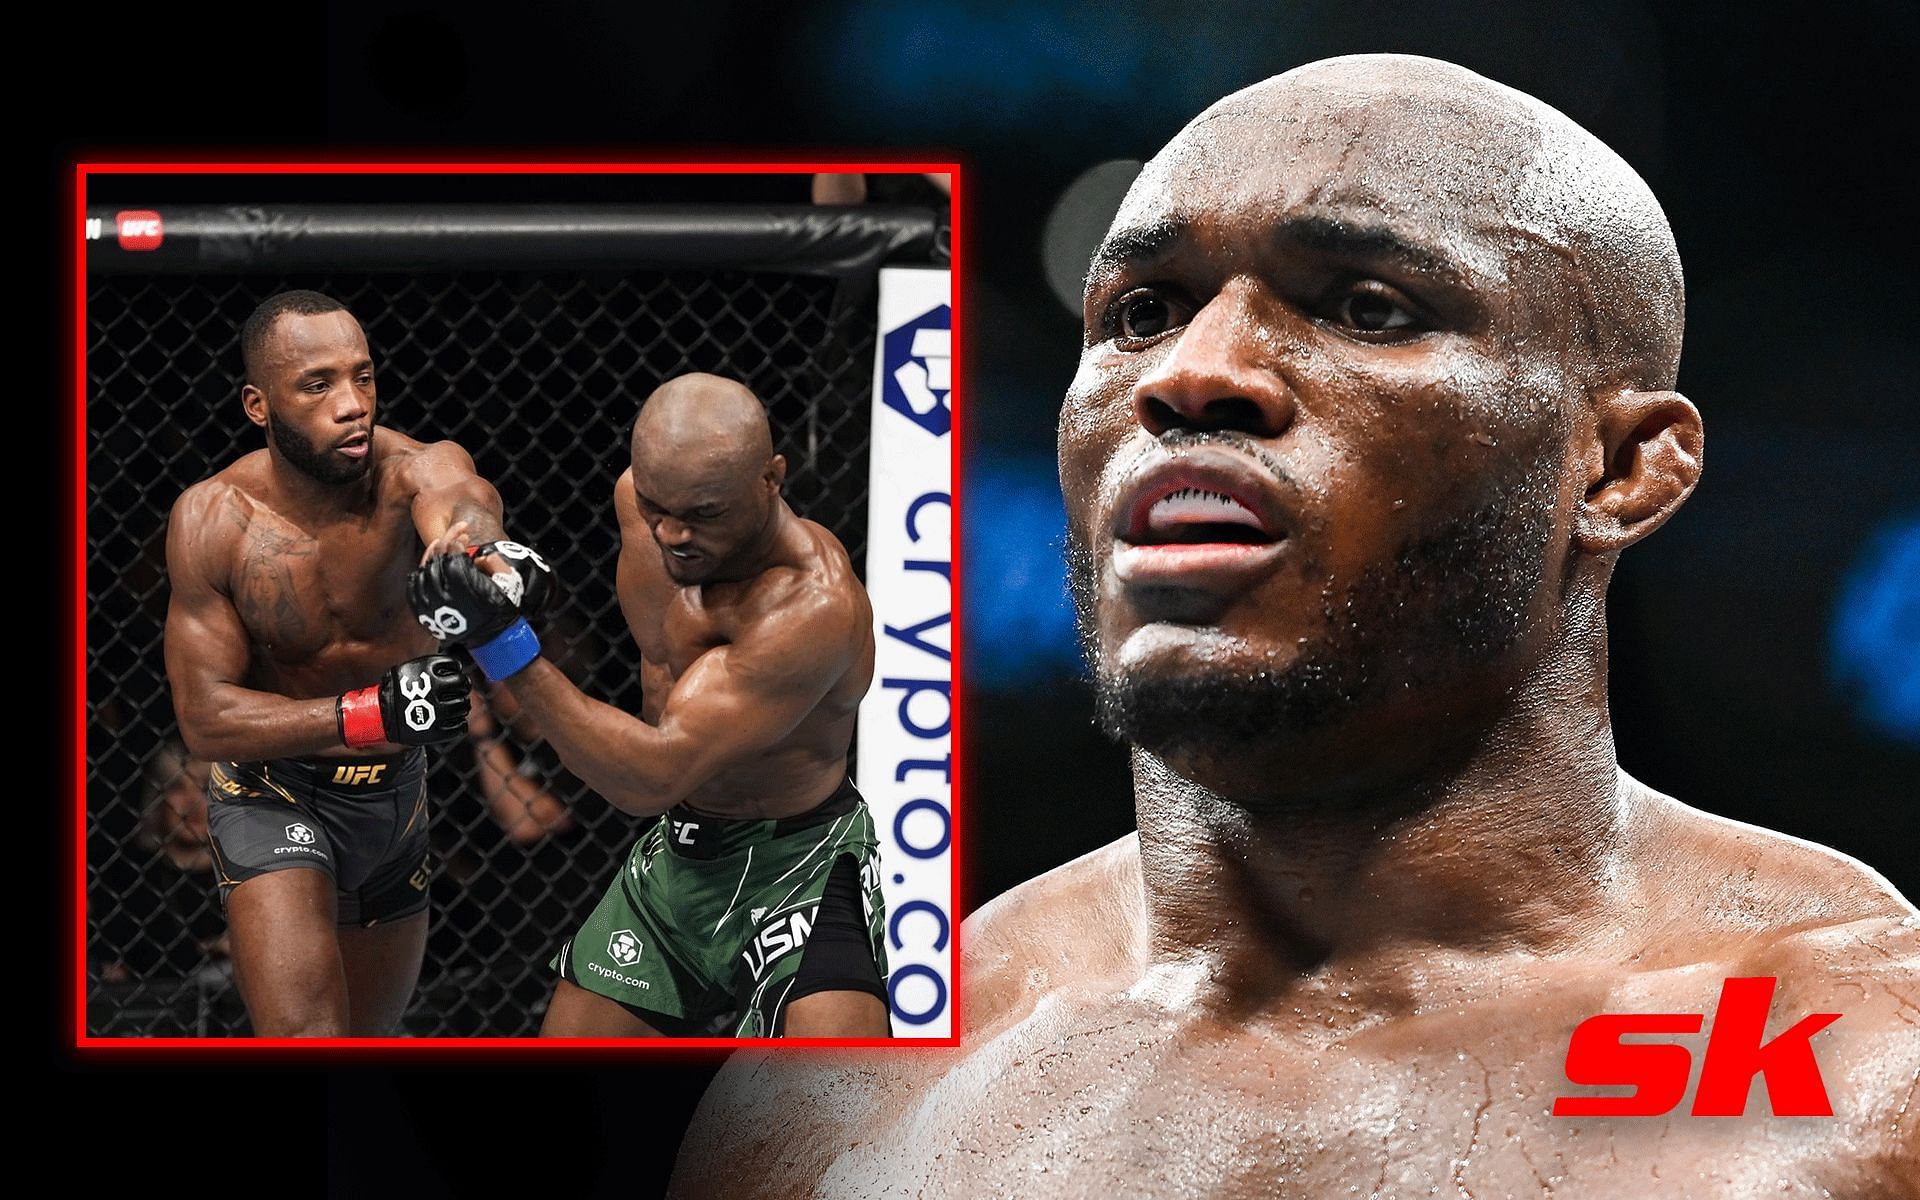 Leon Edwards vs. Kamaru Usman (left) and Usman (right). [Images courtesy: left image from Instagram @UFC and right image from Getty Images]